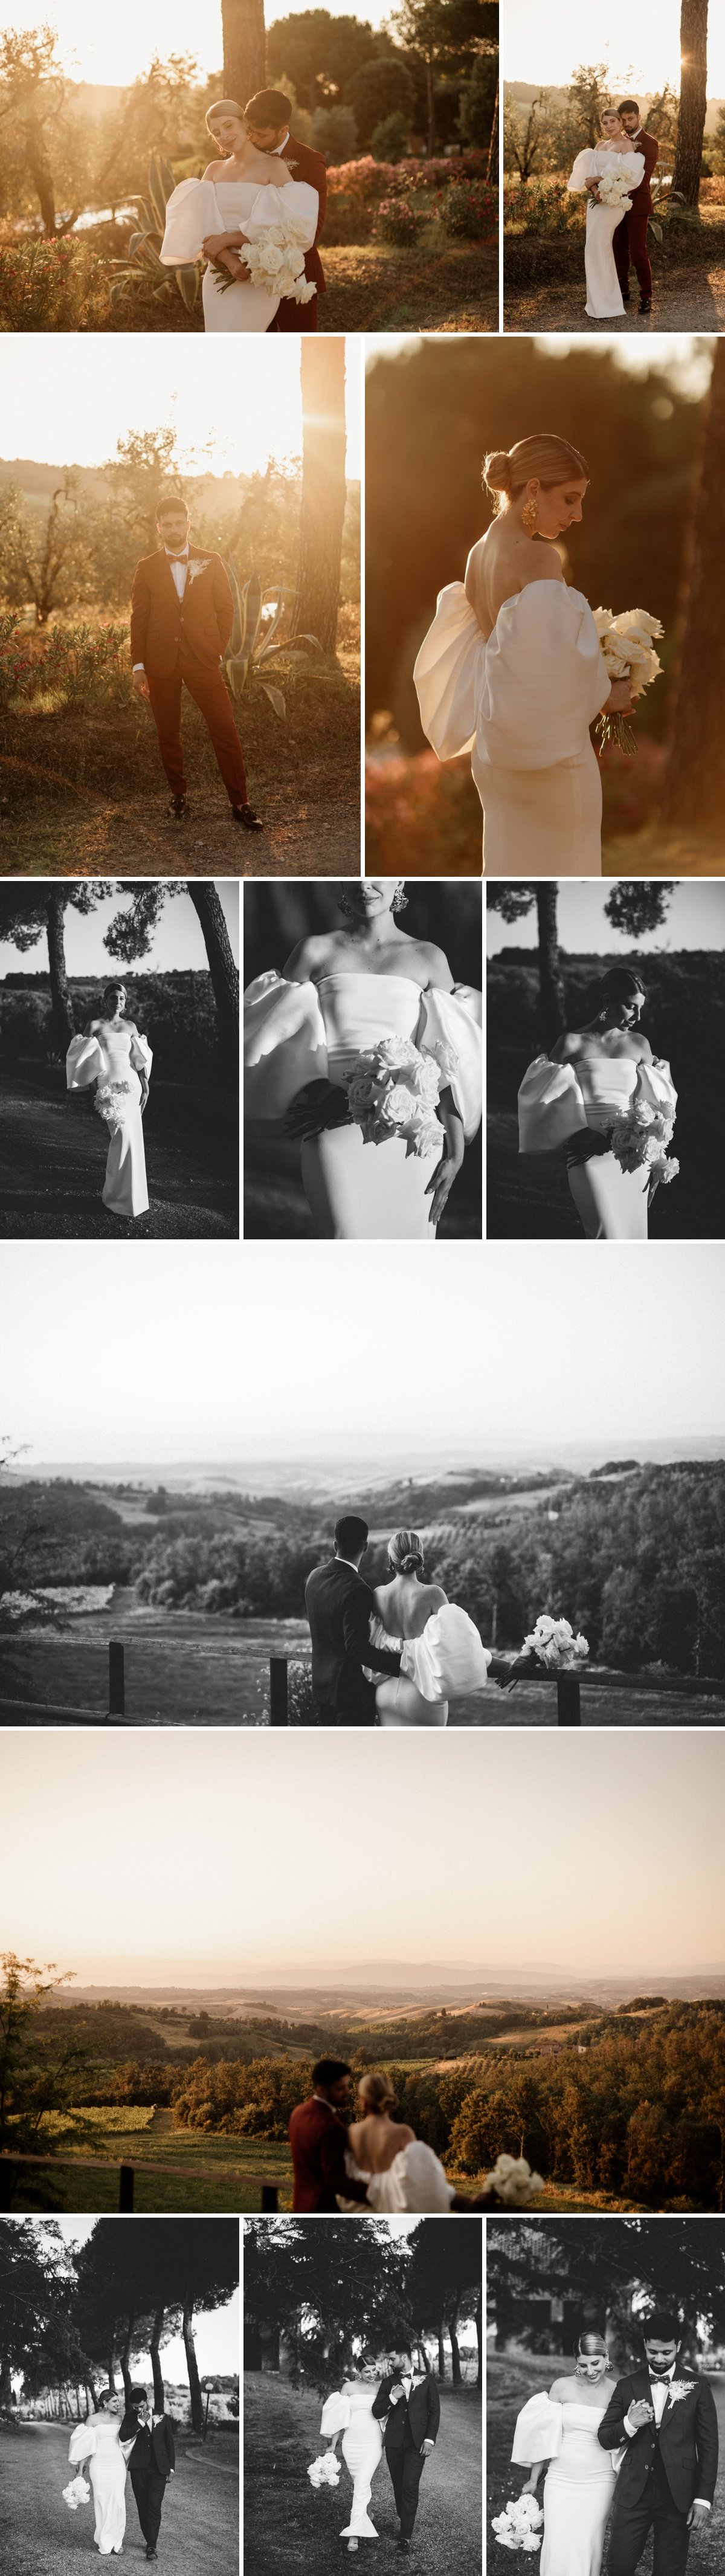 tuscany-wedding-dallk-24.jpg